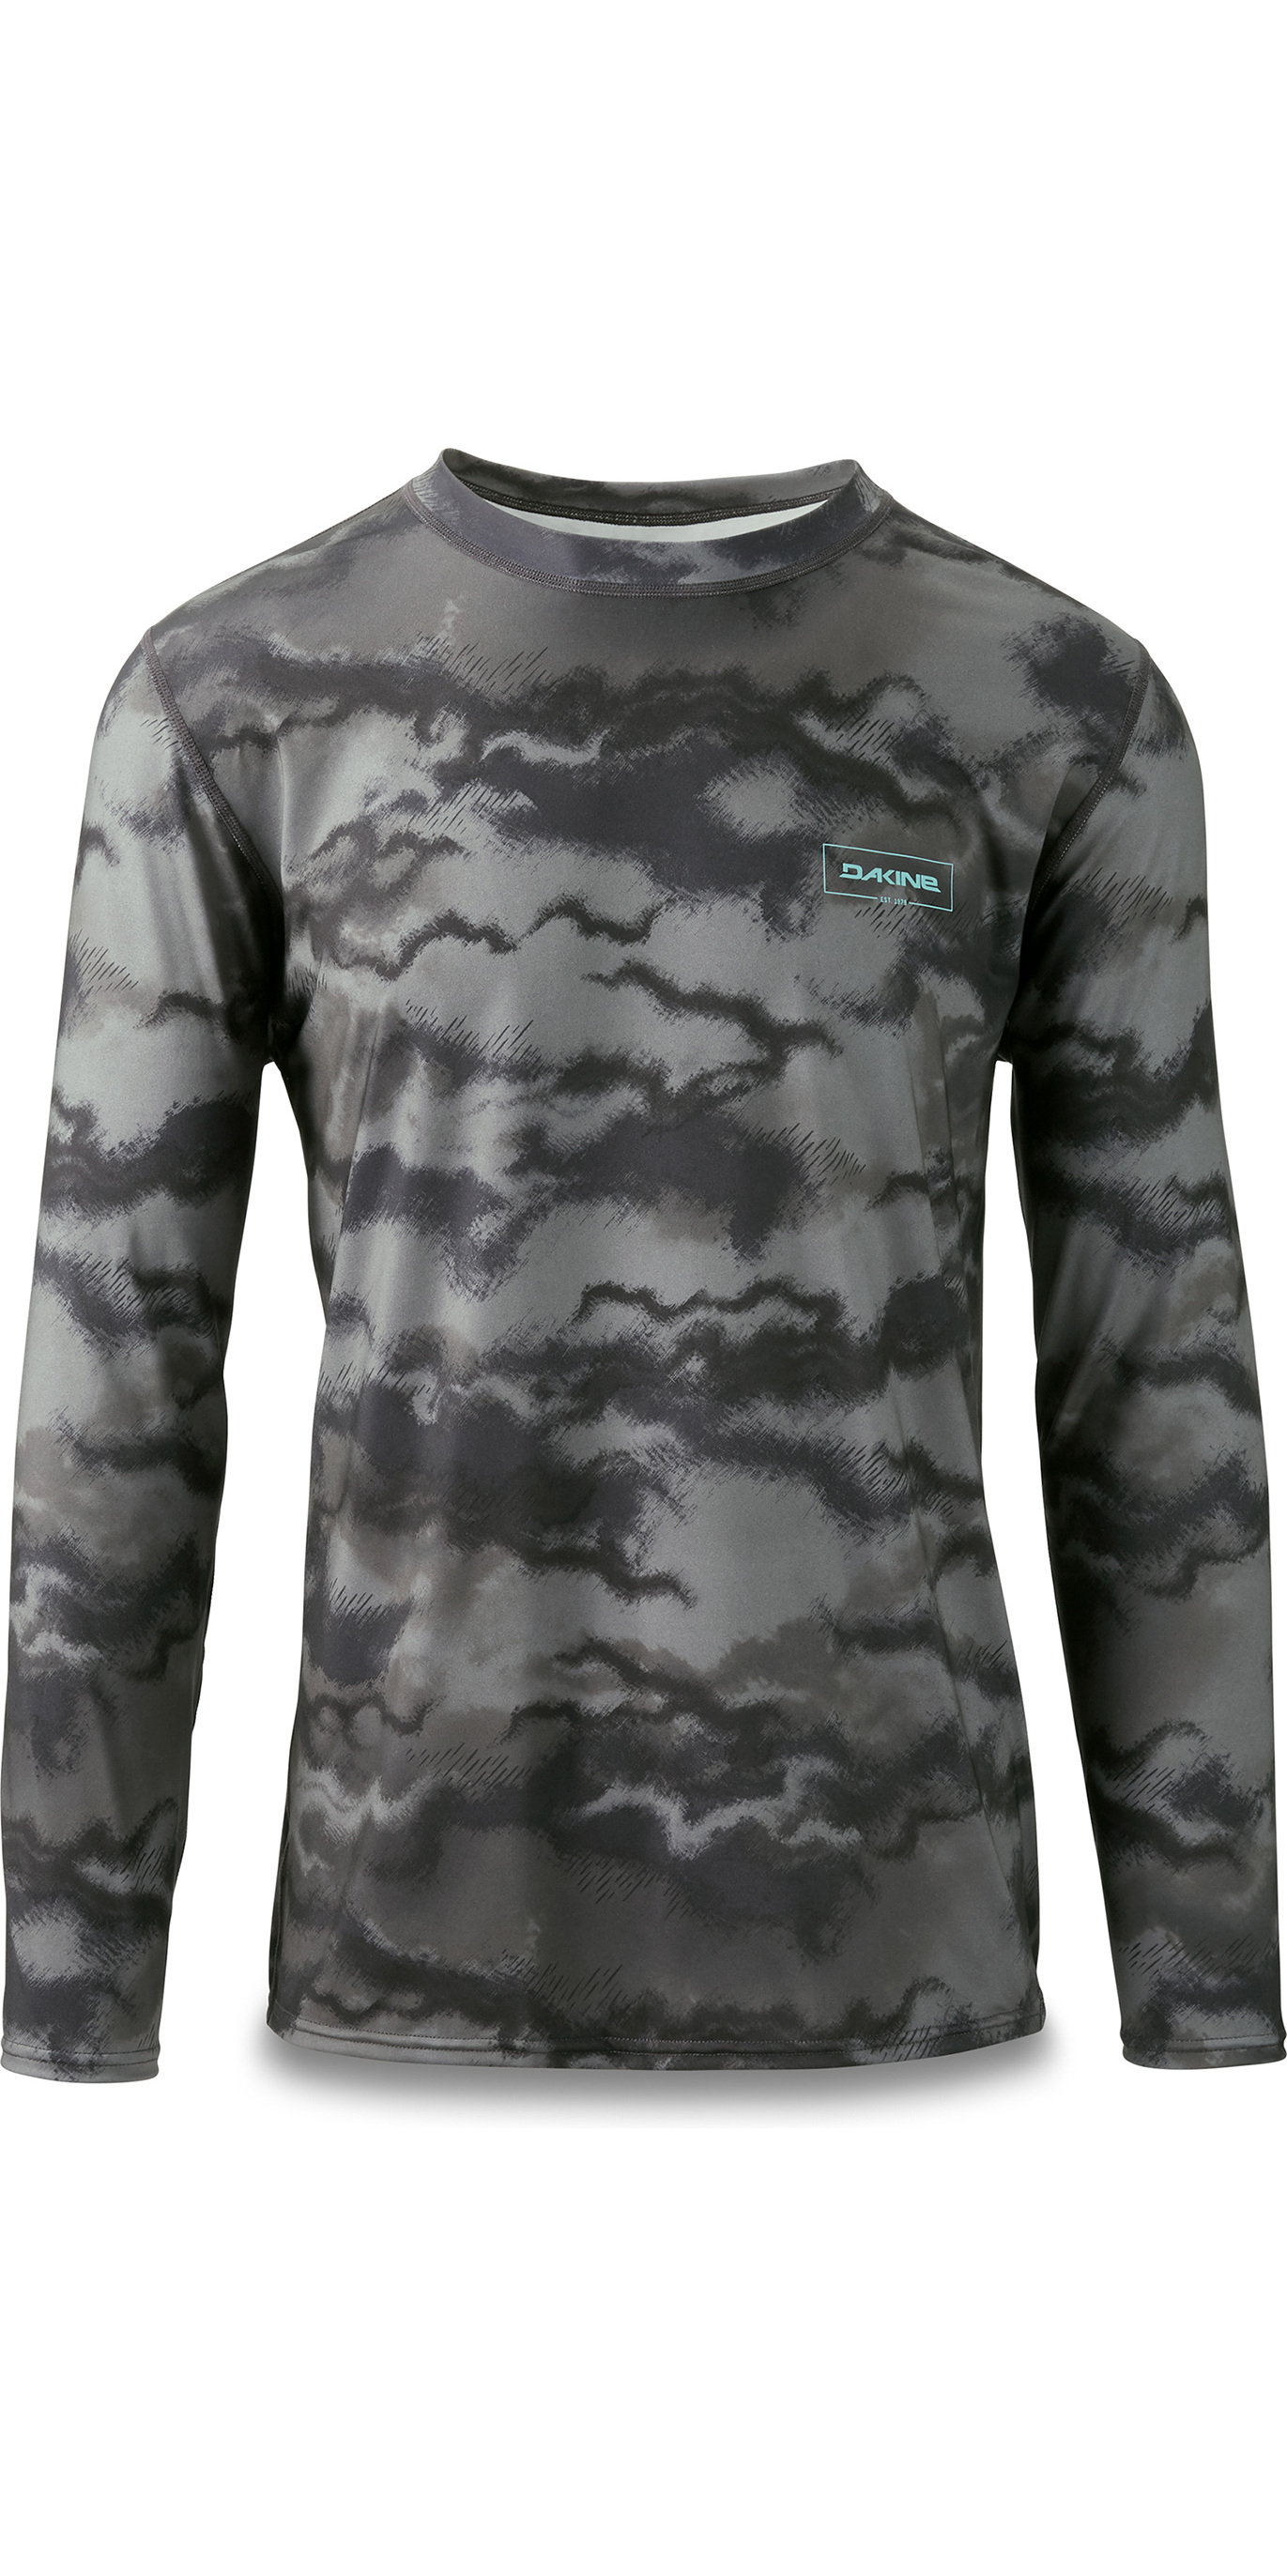 New Carbon DaKine Heavy Duty SS Surf Shirt 